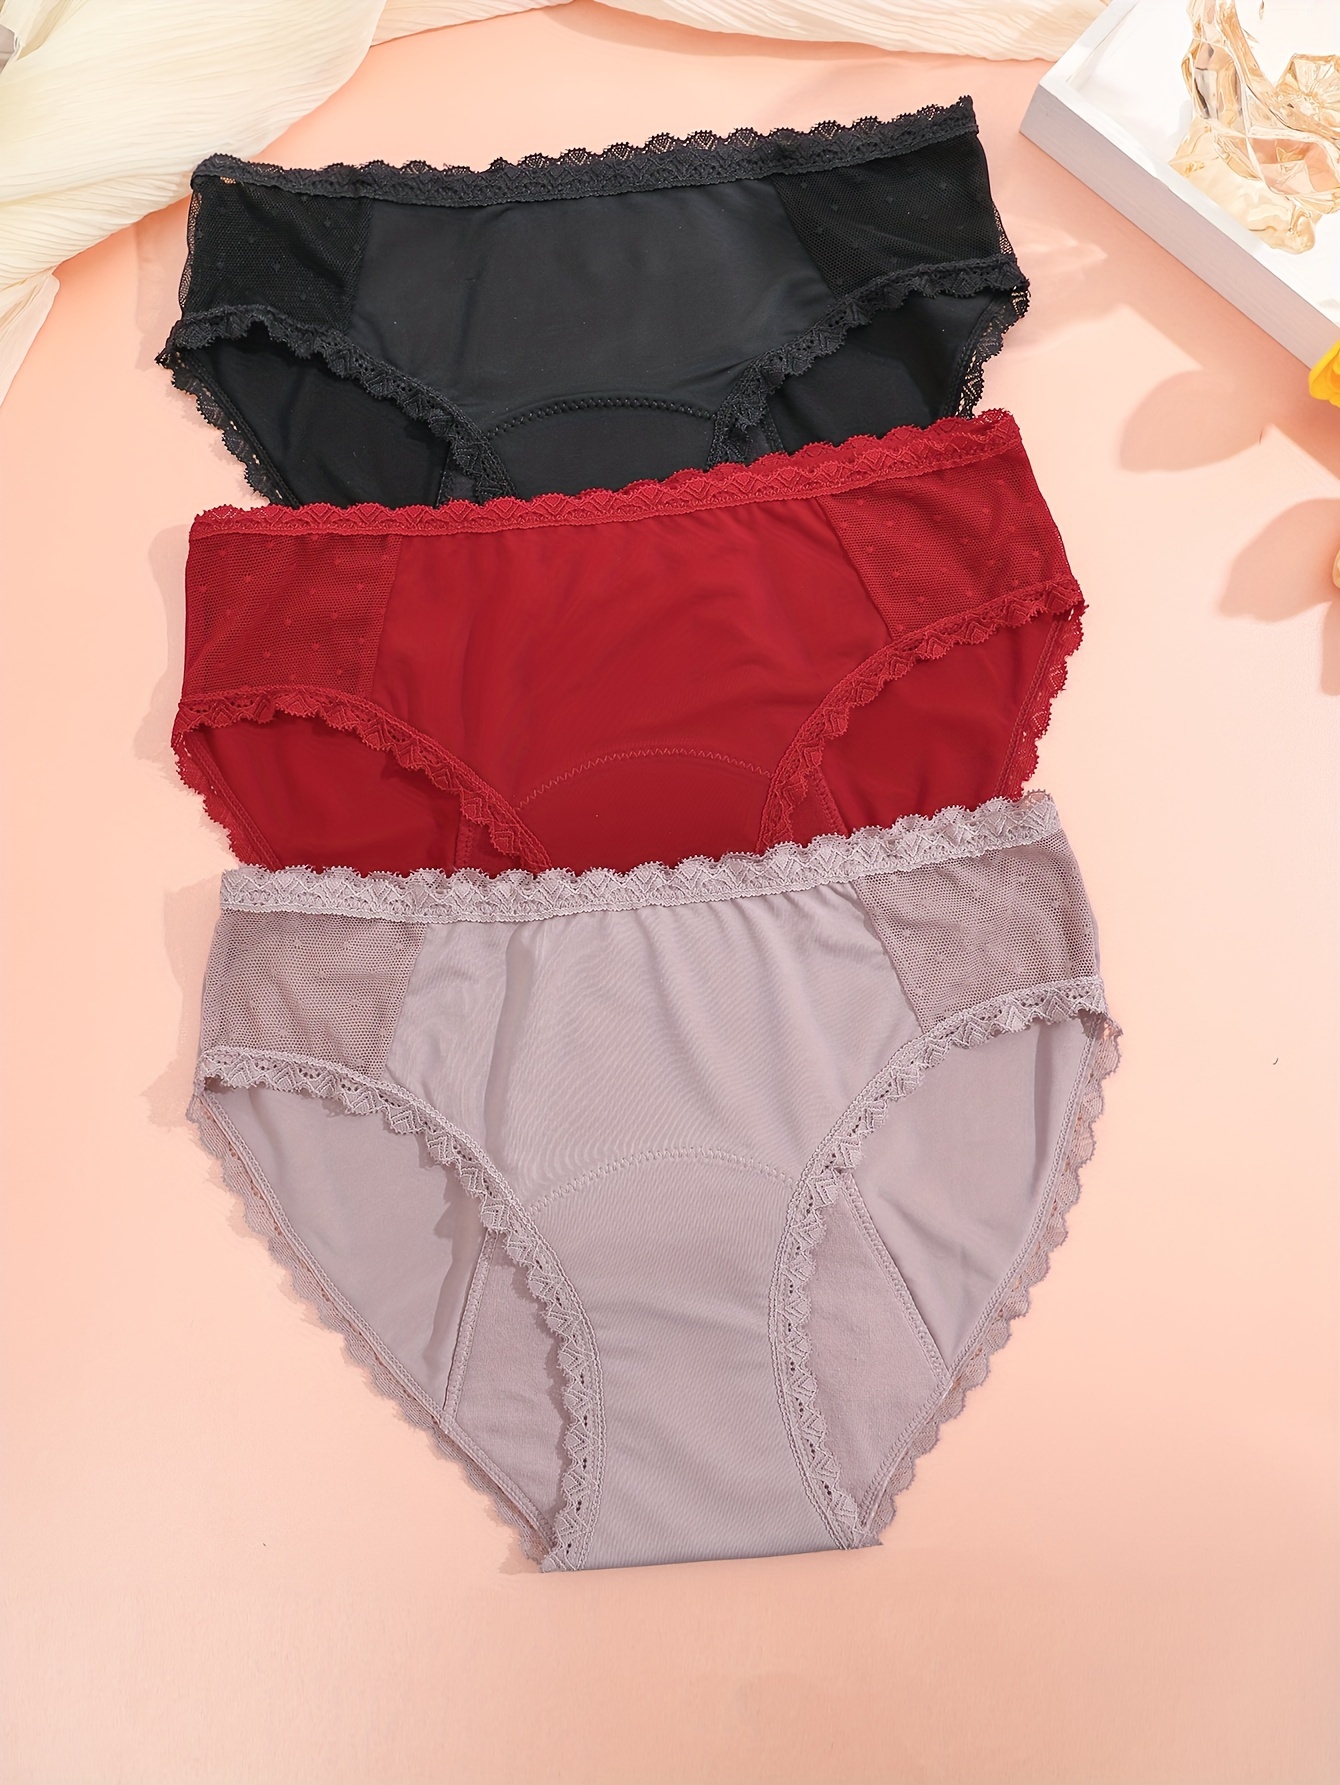 Fashion Women's Underwear 4pcs/lot Women Lace Panties Seamless Panty  Breathable B